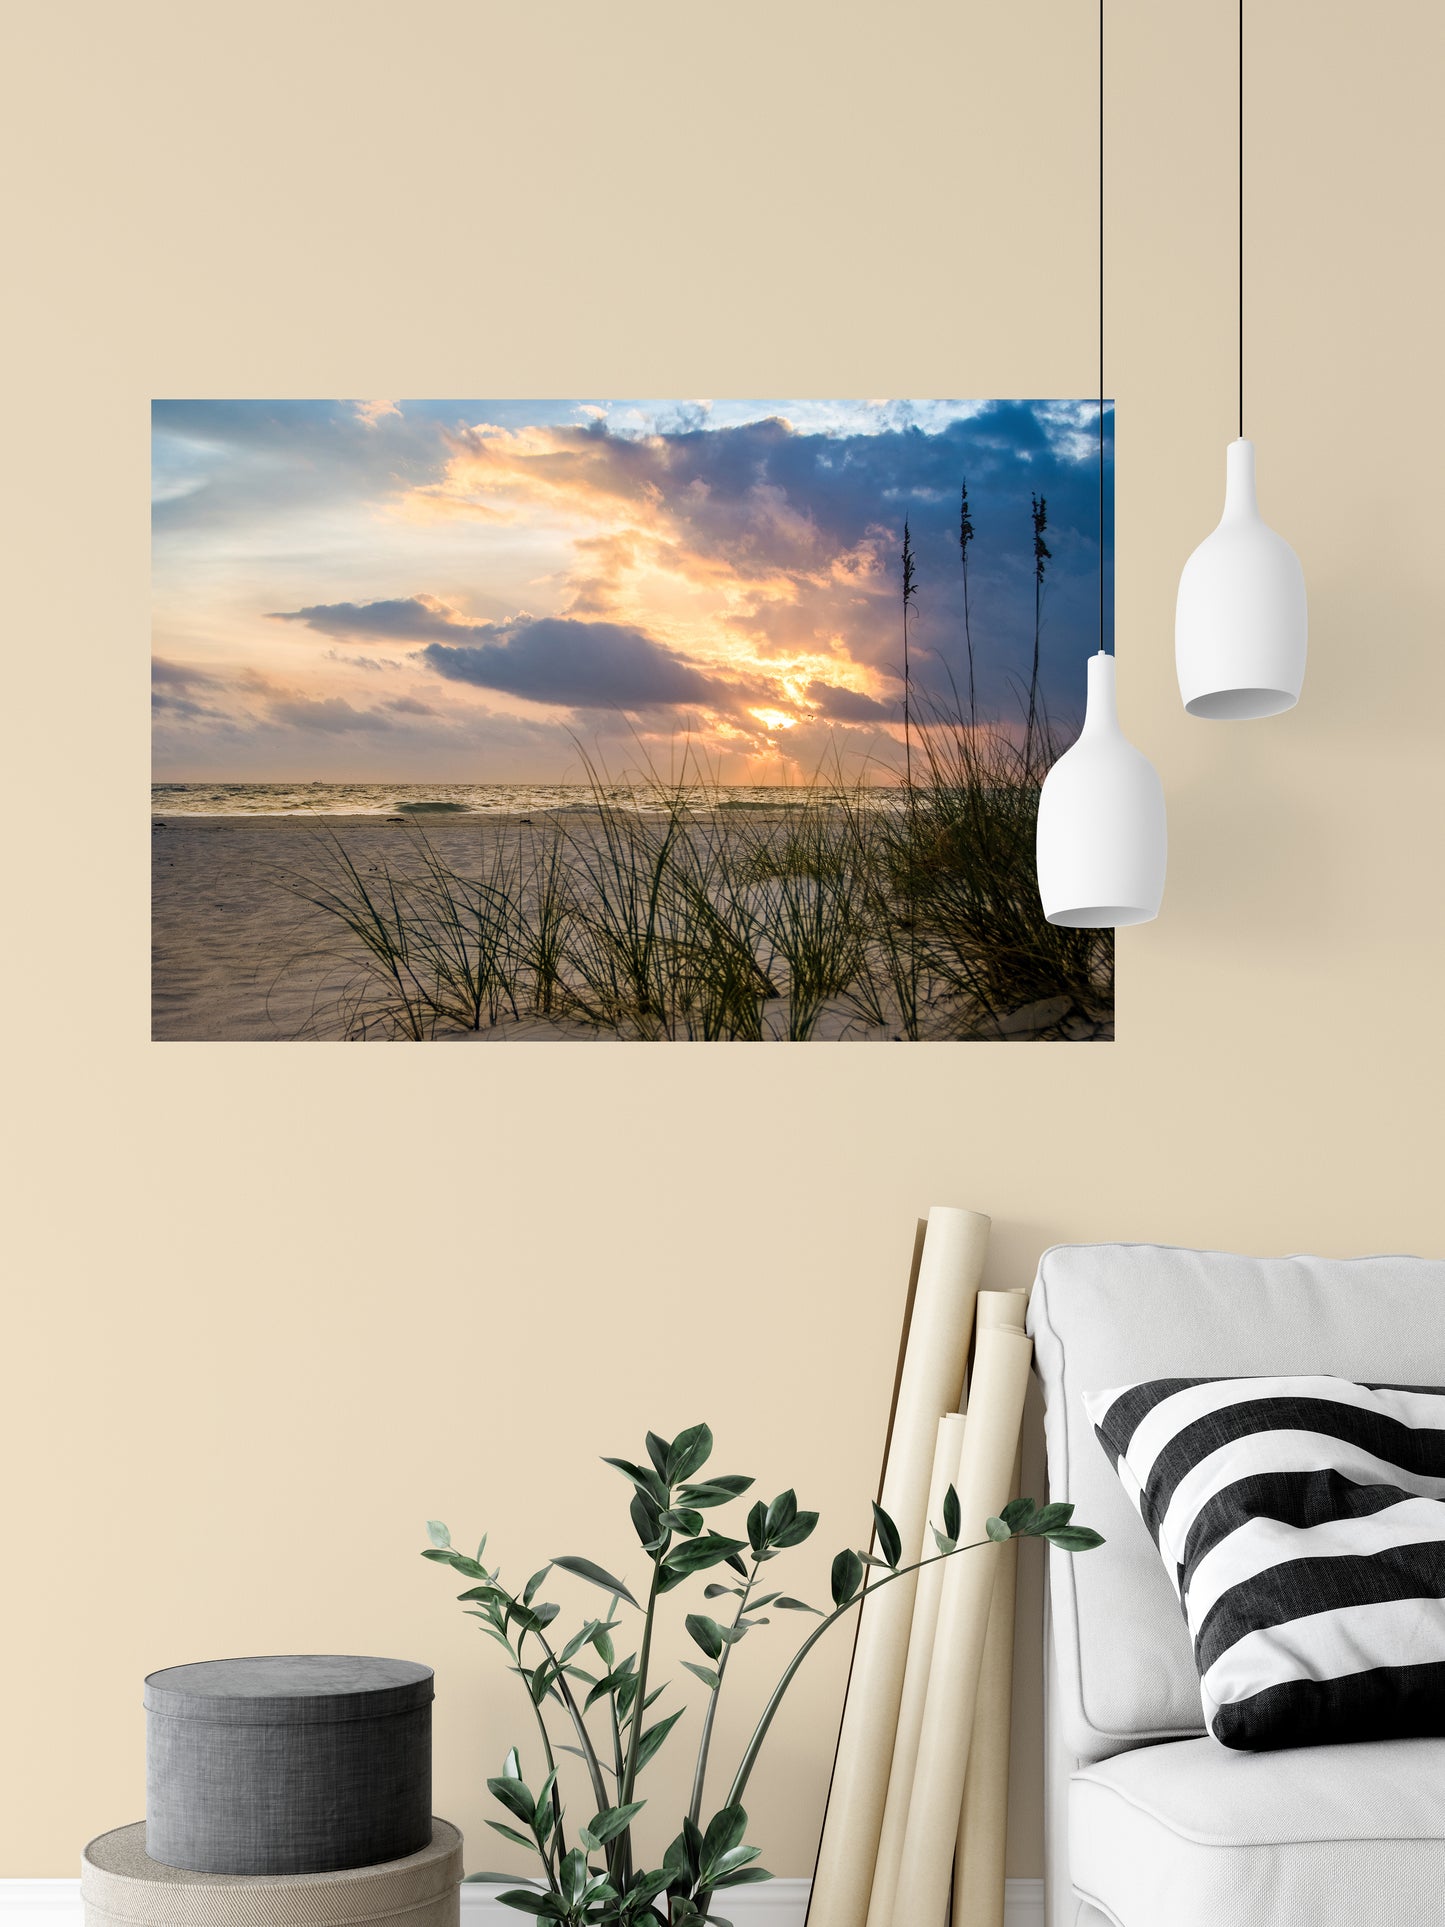 Beach Sunset Poster: Peaceful Cloudy Sunset on Beach - Coastal / Seascape / Nature / Landscape Photograph Loose / Unframed / Frameless / Frameable Wall Art Print - Artwork